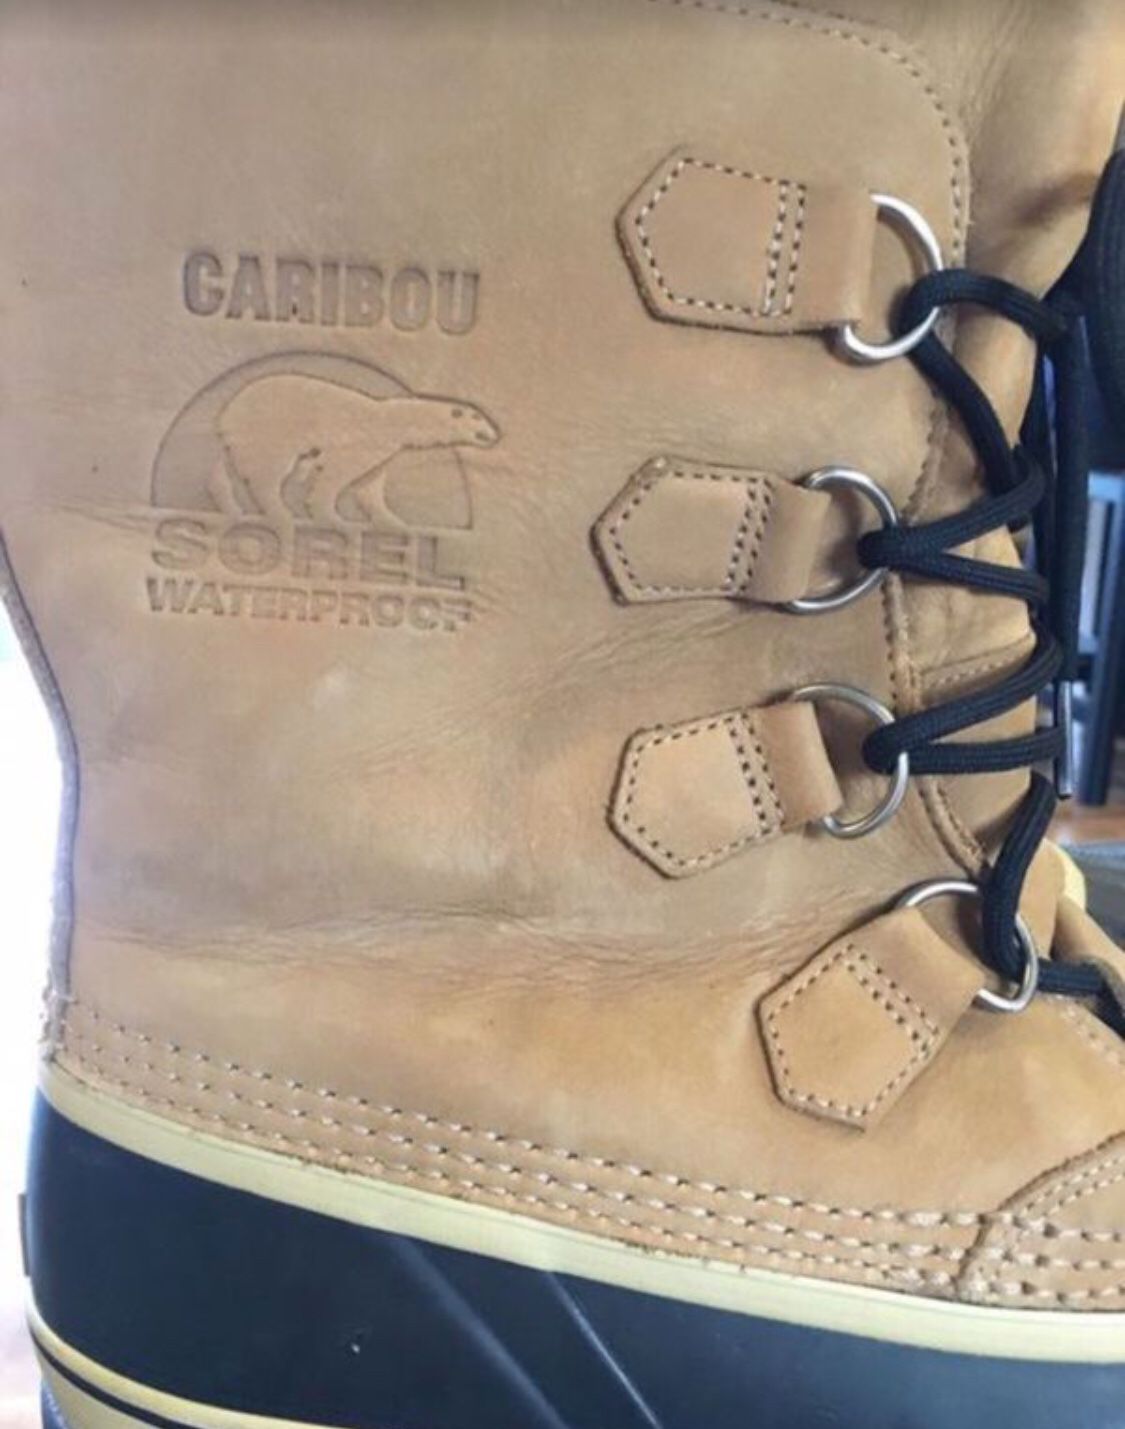 Sorel Men's Caribou Waterproof Winter Boots